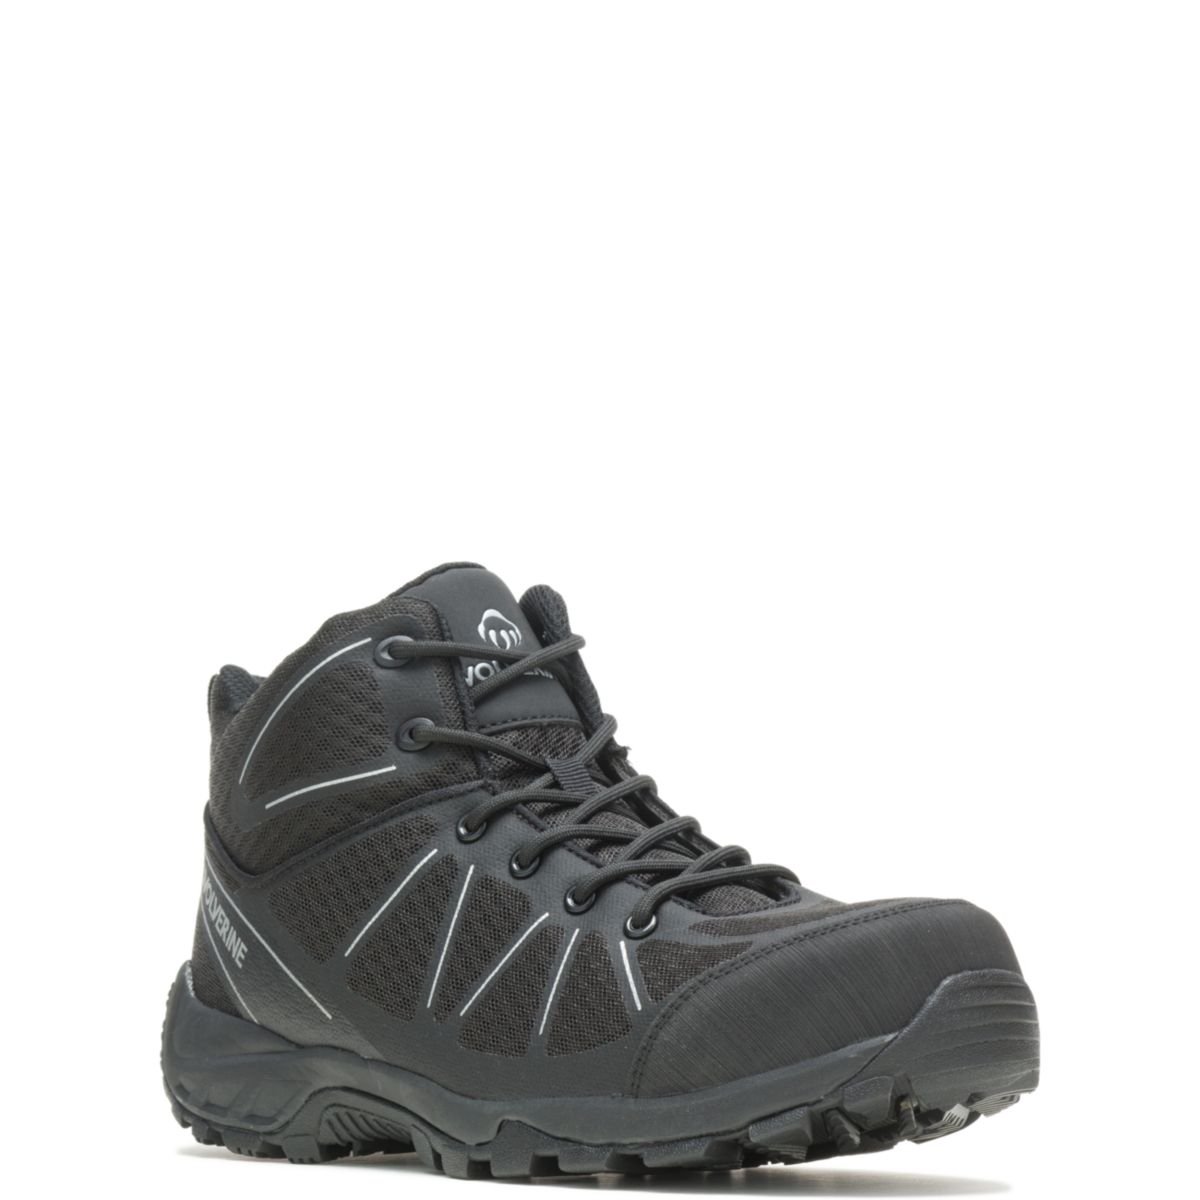 WOLVERINE Men's Amherst Ii CarbonMAXÂ® Composite Toe Work Boot Black - W201150 Varies BLACK - BLACK, 14